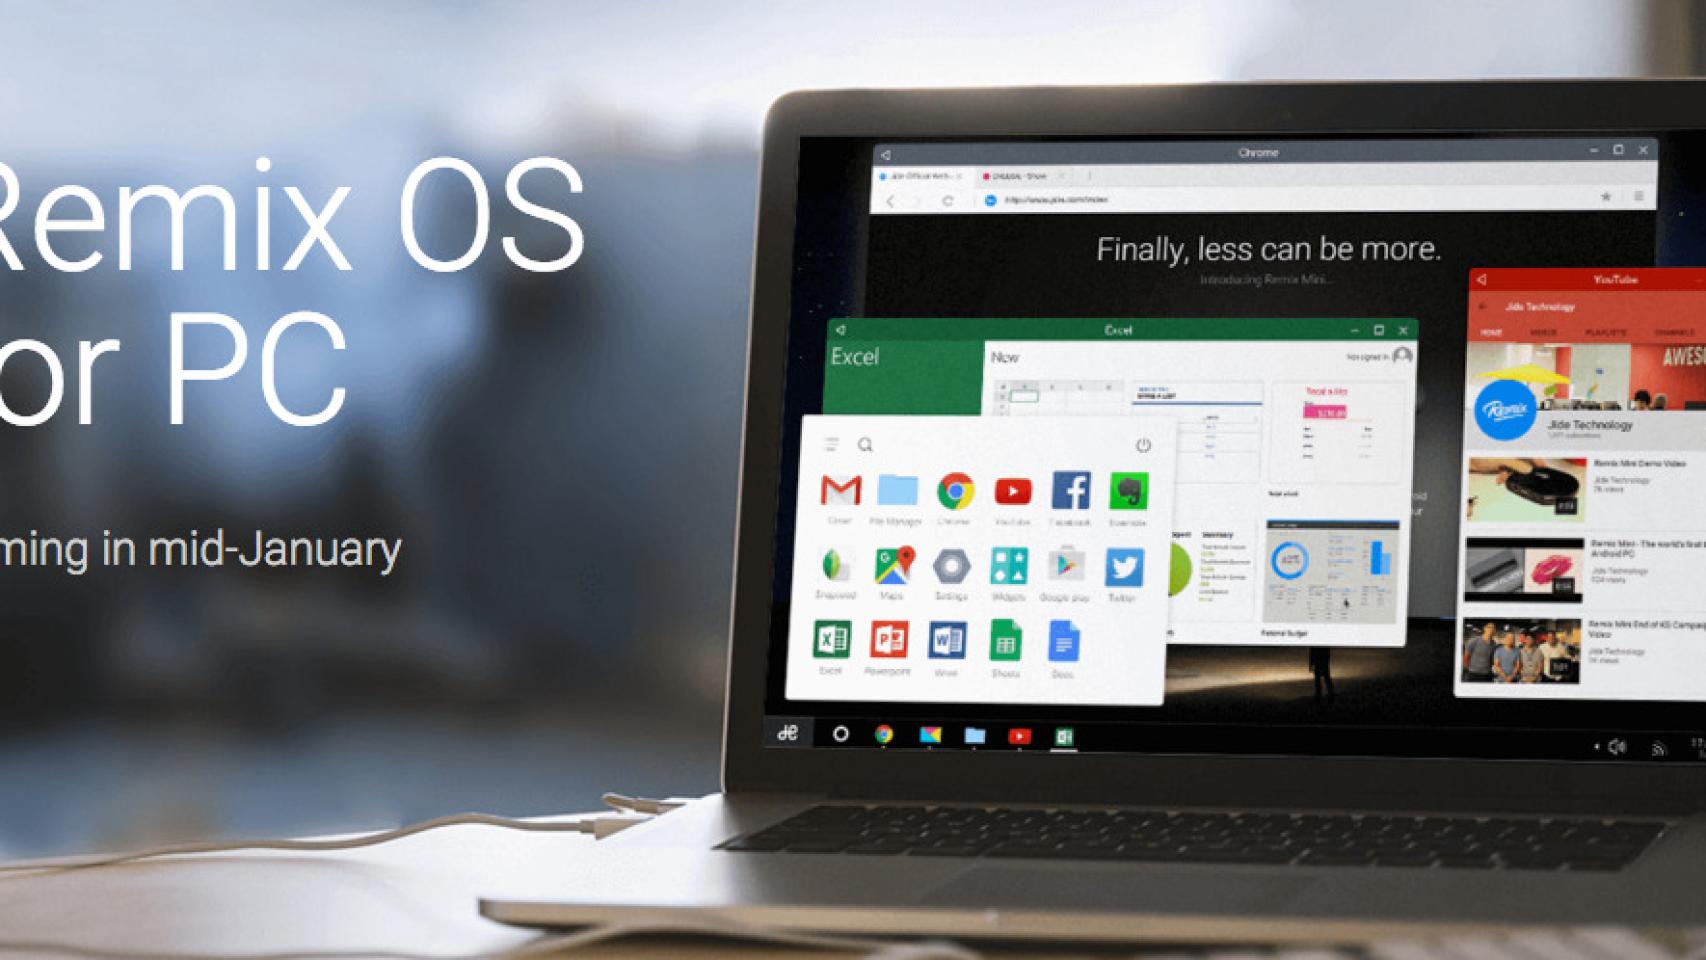 Remix OS, la solución perfecta para llevar Android a tu PC o Mac